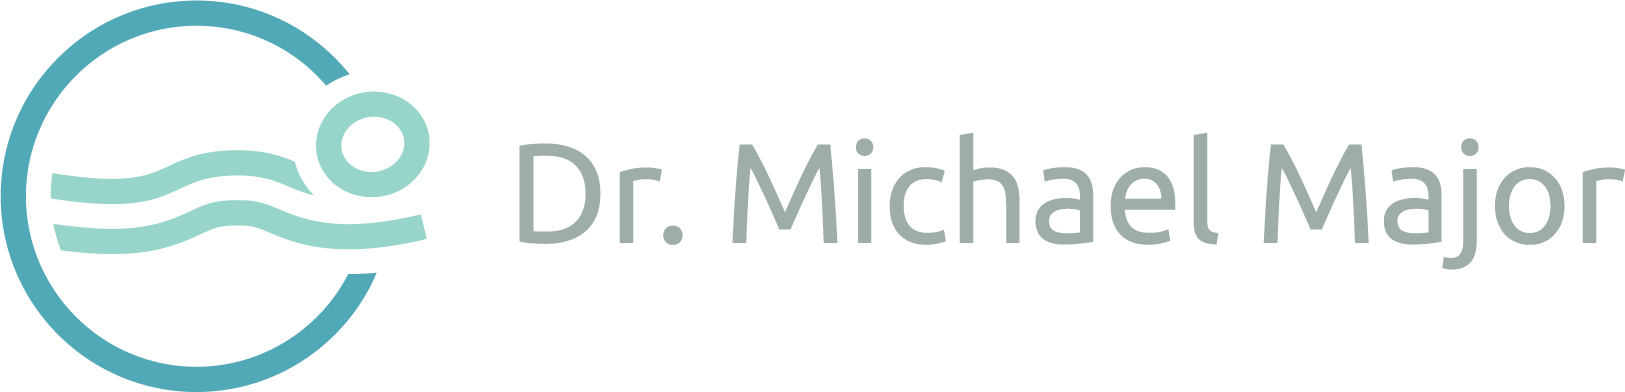 Dr. Michael Major